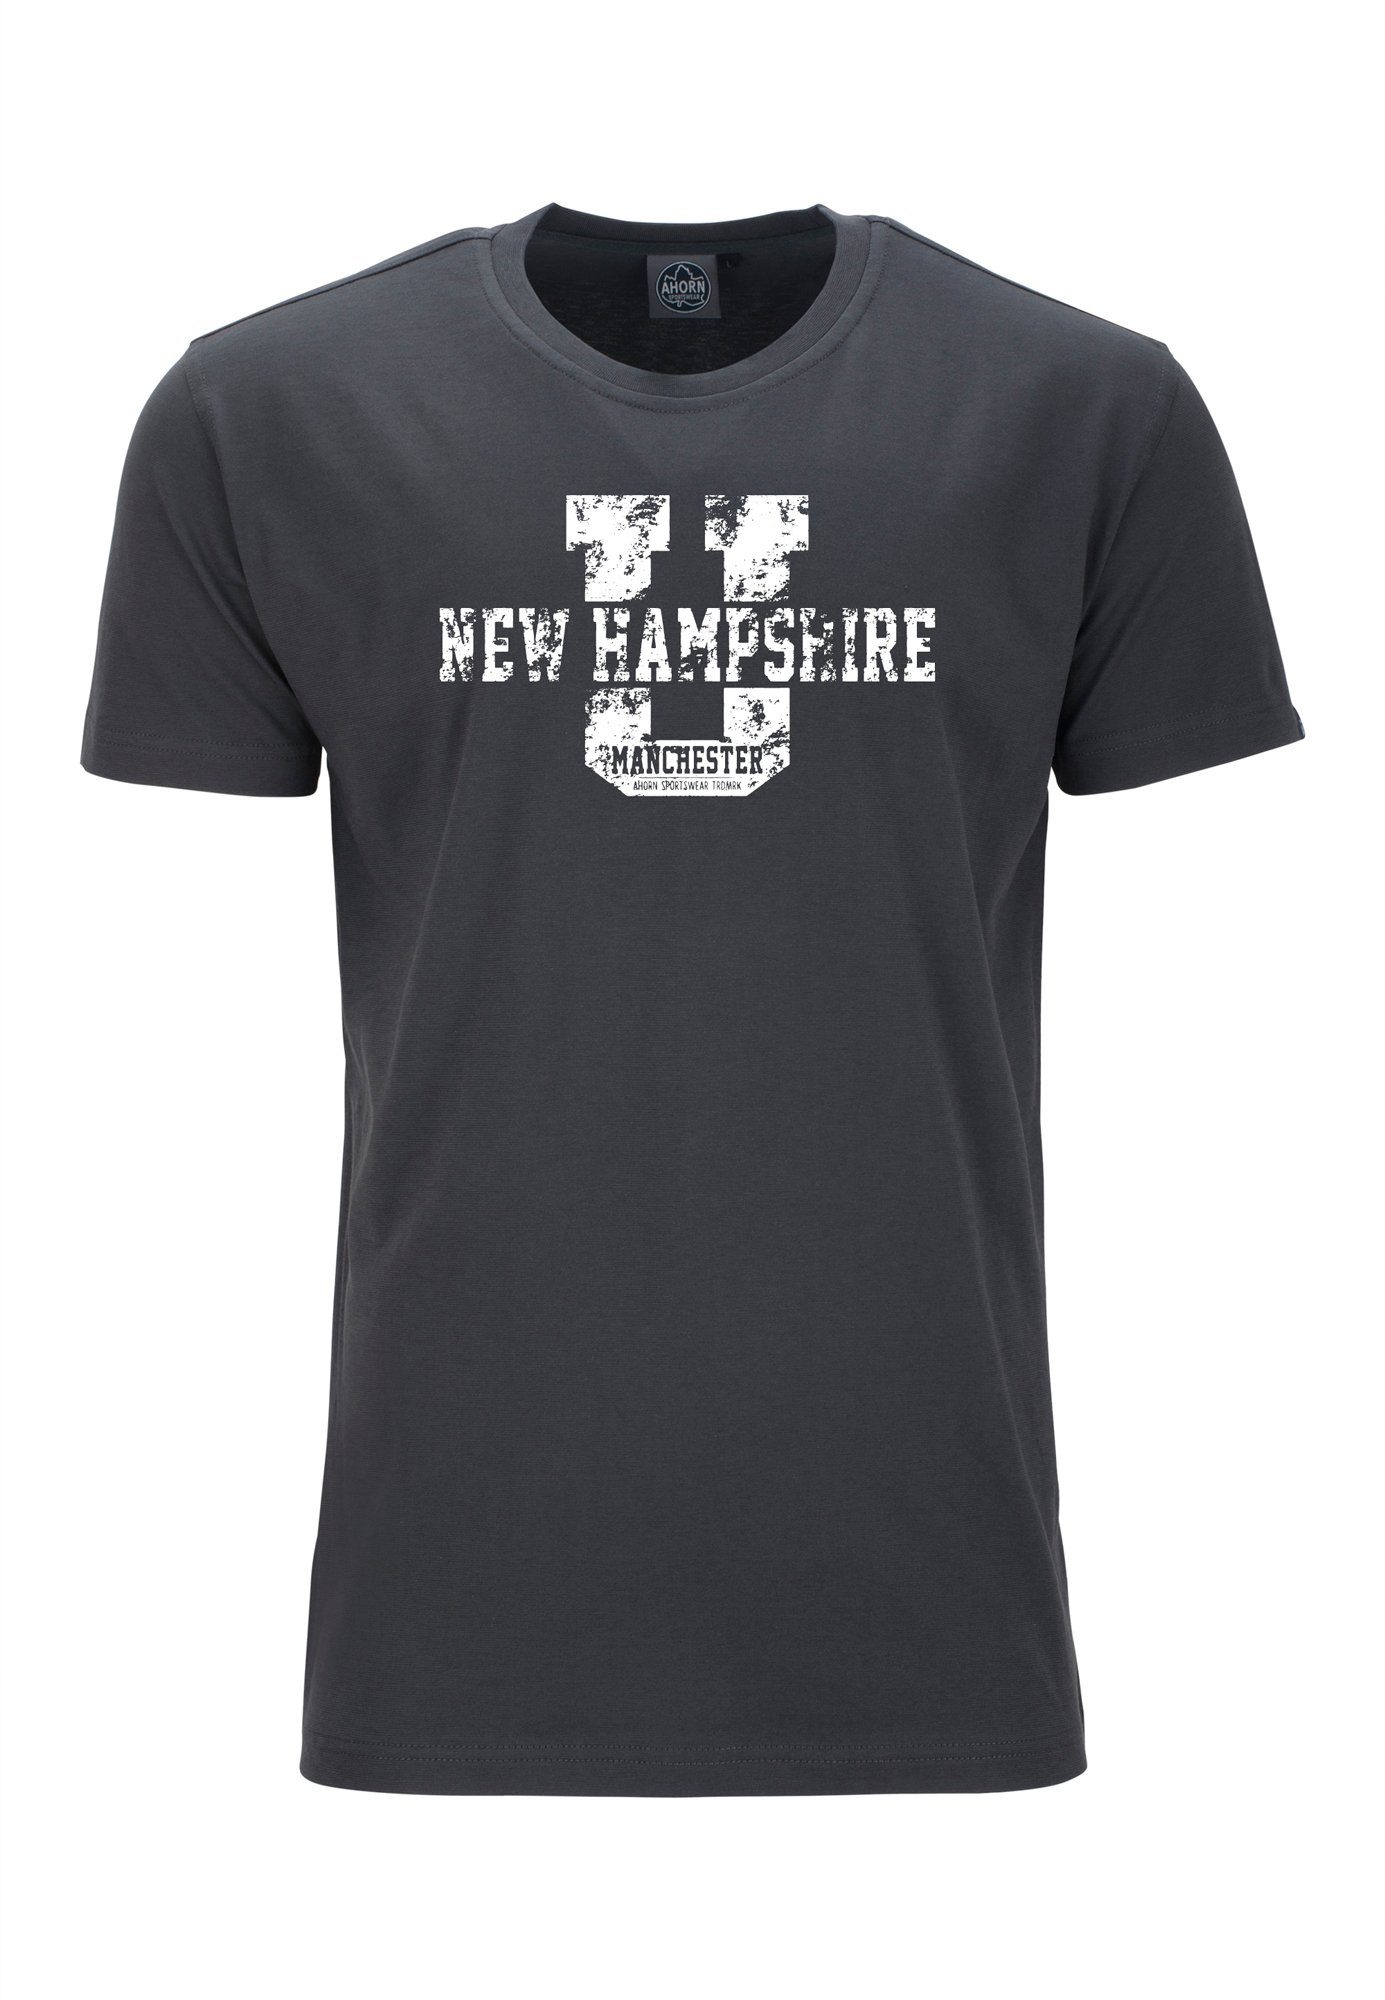 AHORN SPORTSWEAR T-Shirt NEW HAMPSHIRE mit coolem Frontprint grau